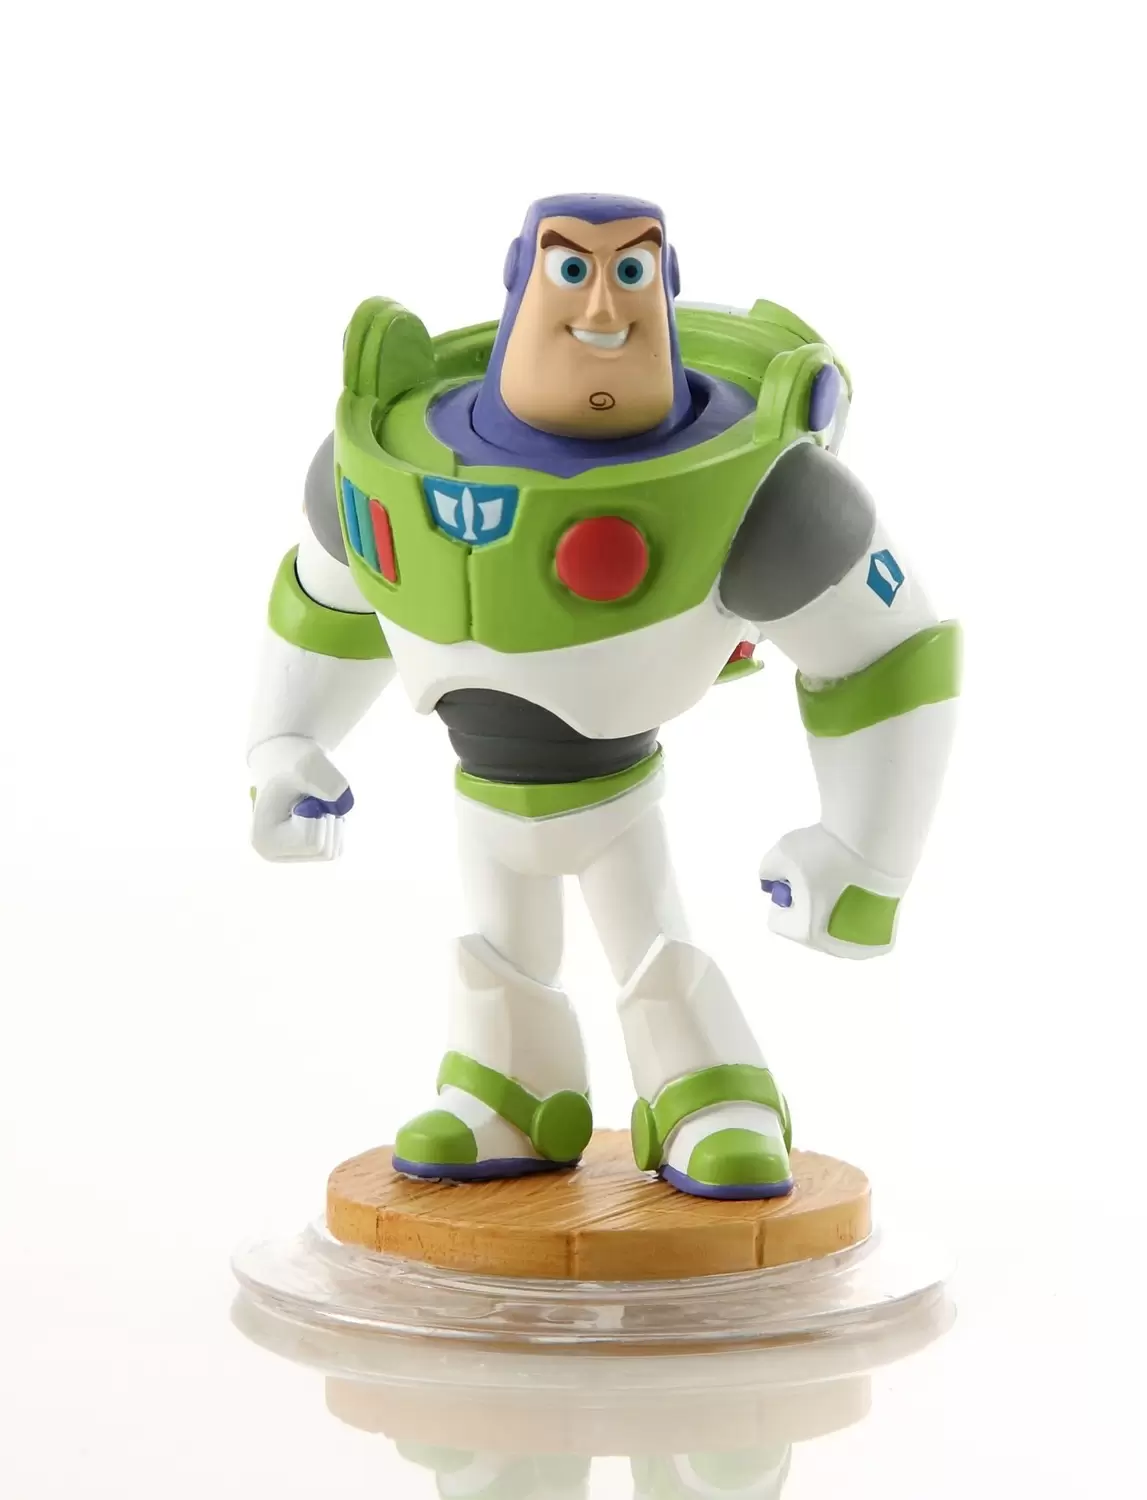 Disney Infinity Action figures - Buzz Lightyear